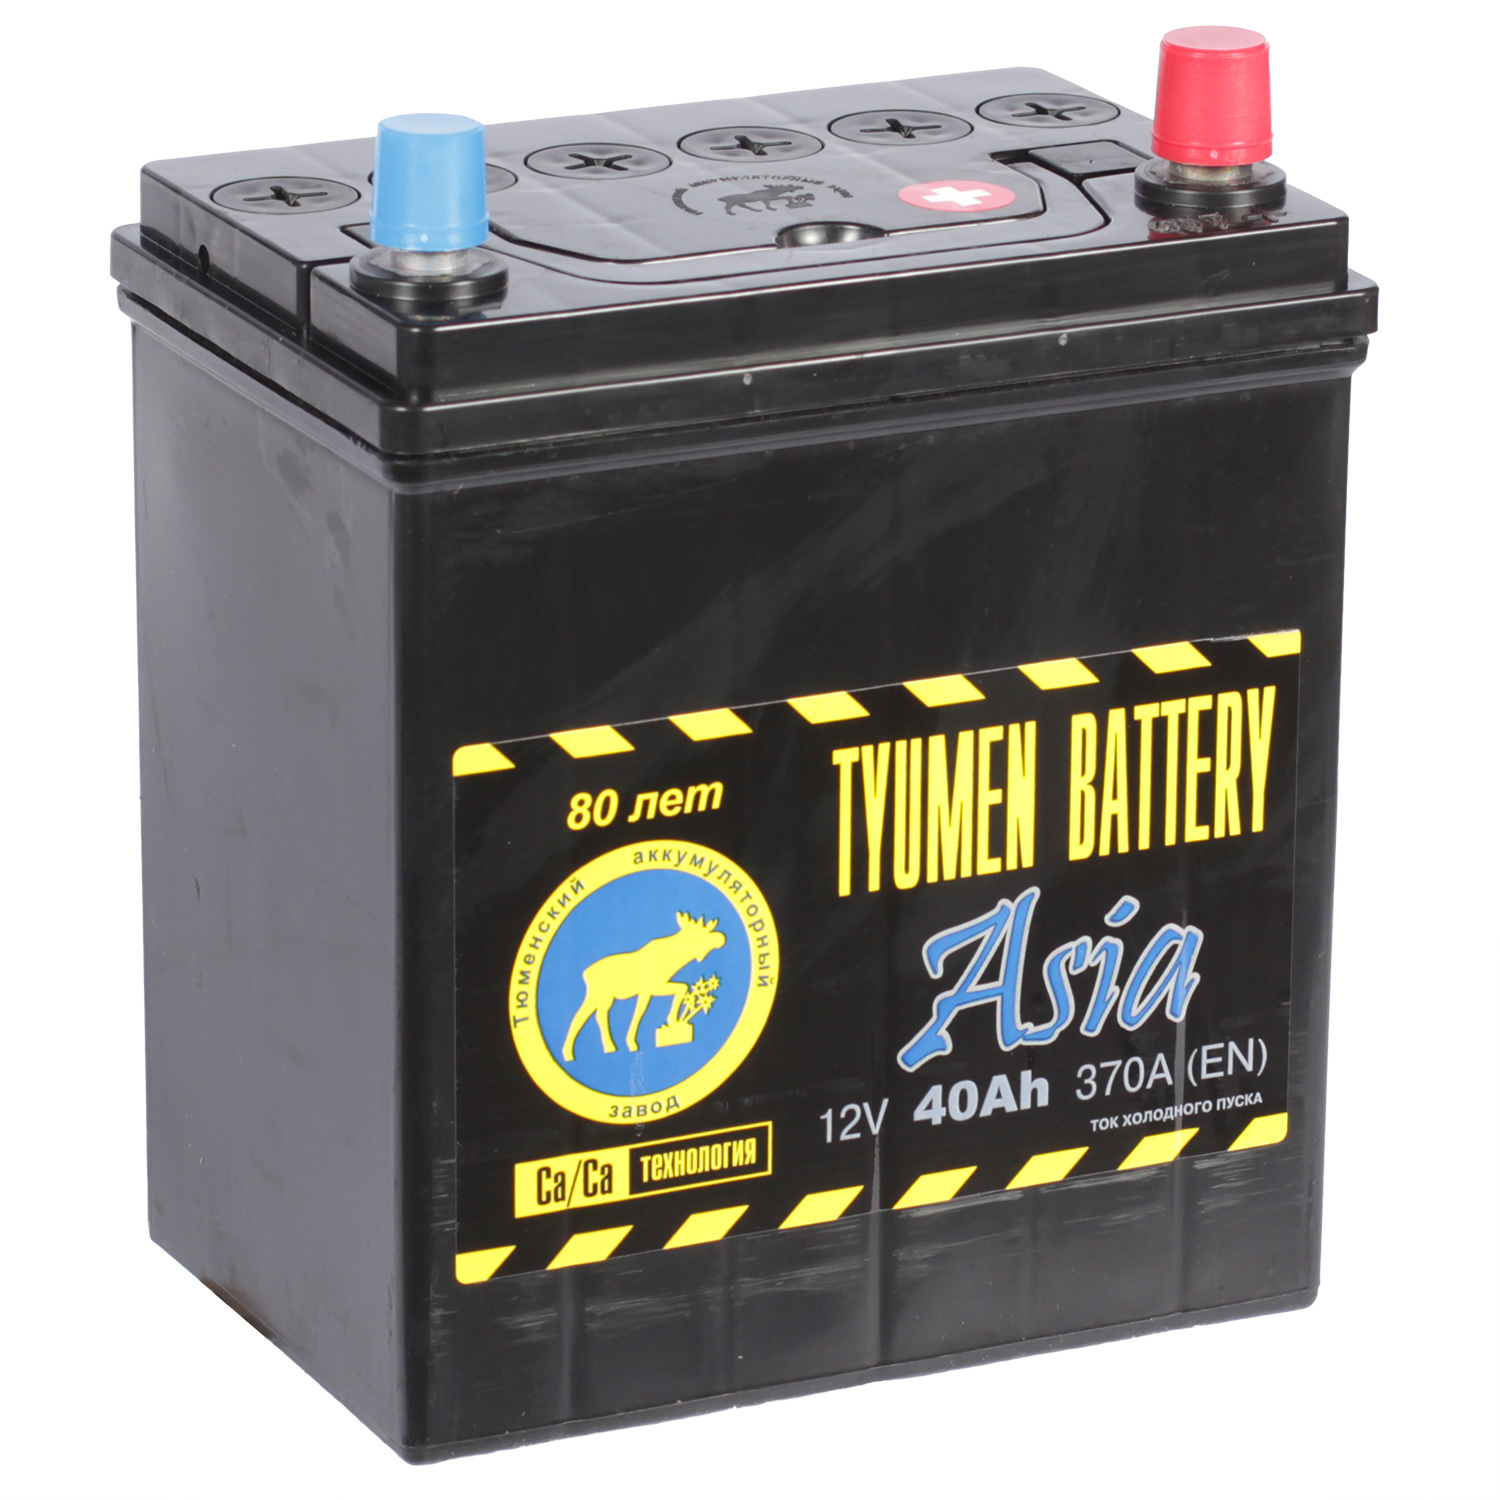 Tyumen Battery Автомобильный аккумулятор Tyumen Battery Asia 40 Ач обратная полярность B19L tyumen battery автомобильный аккумулятор tyumen battery asia 40 ач обратная полярность b19l